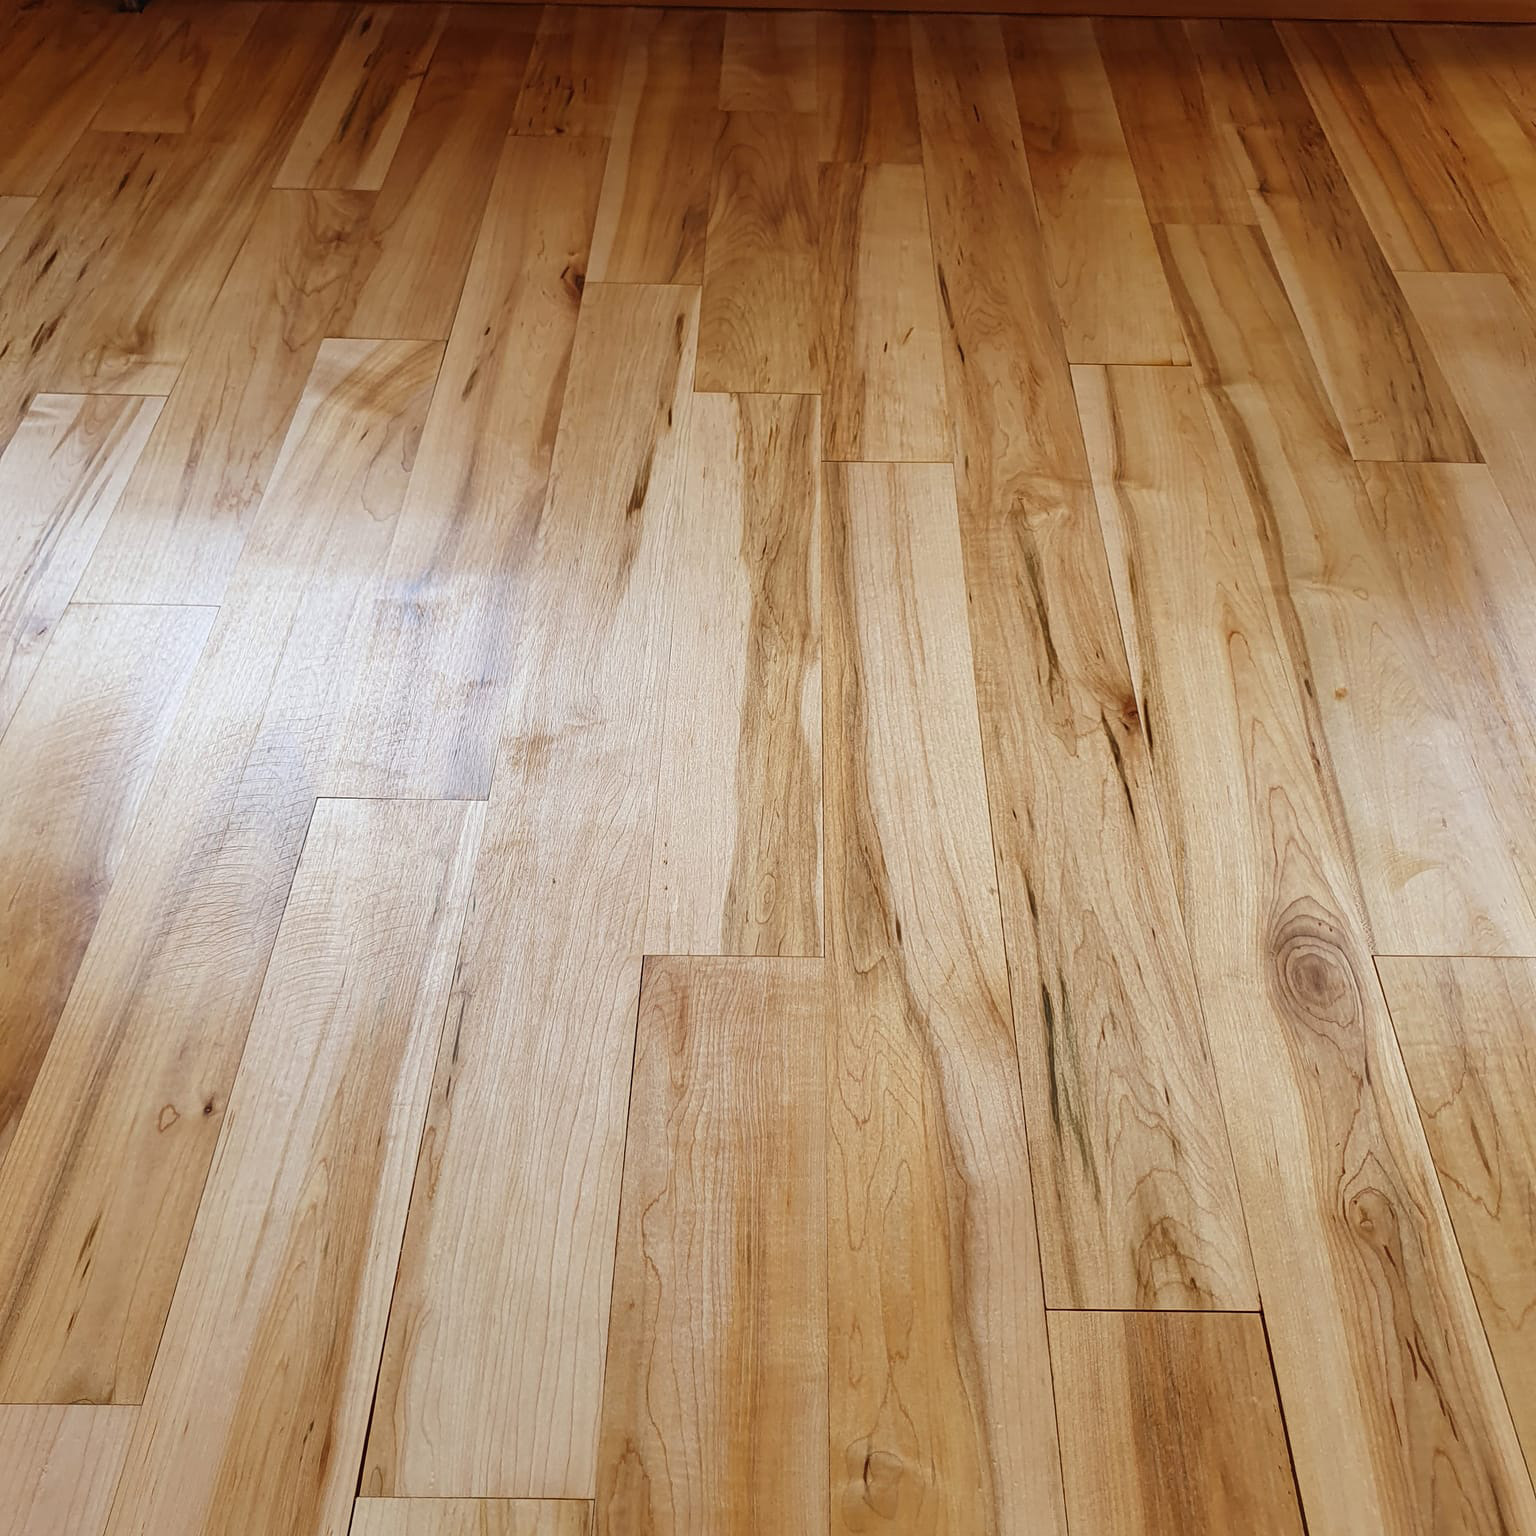 Sanded and varnished solid wood flooring